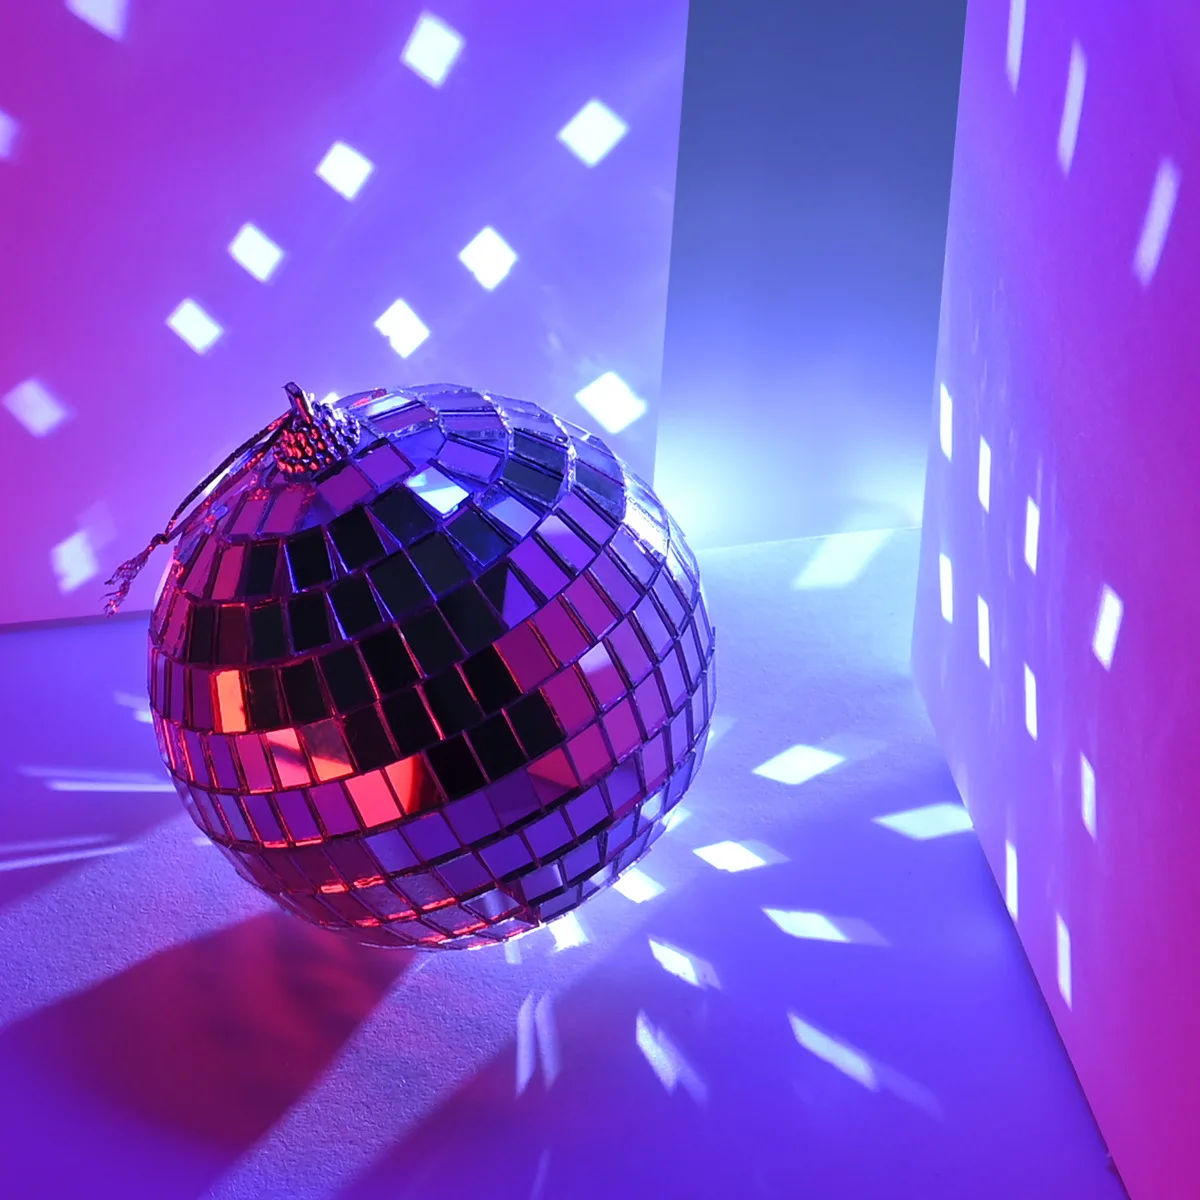 https://ae01.alicdn.com/kf/S3ed78fb3f05e48e7b1ca2c7da0a6324bX/Disco-Ball-Mirror-Ball-Reflective-Glass10-15-20-30Cm-Rotating-Mirror-Ball-Light-Christmas-Party-Wedding.jpg